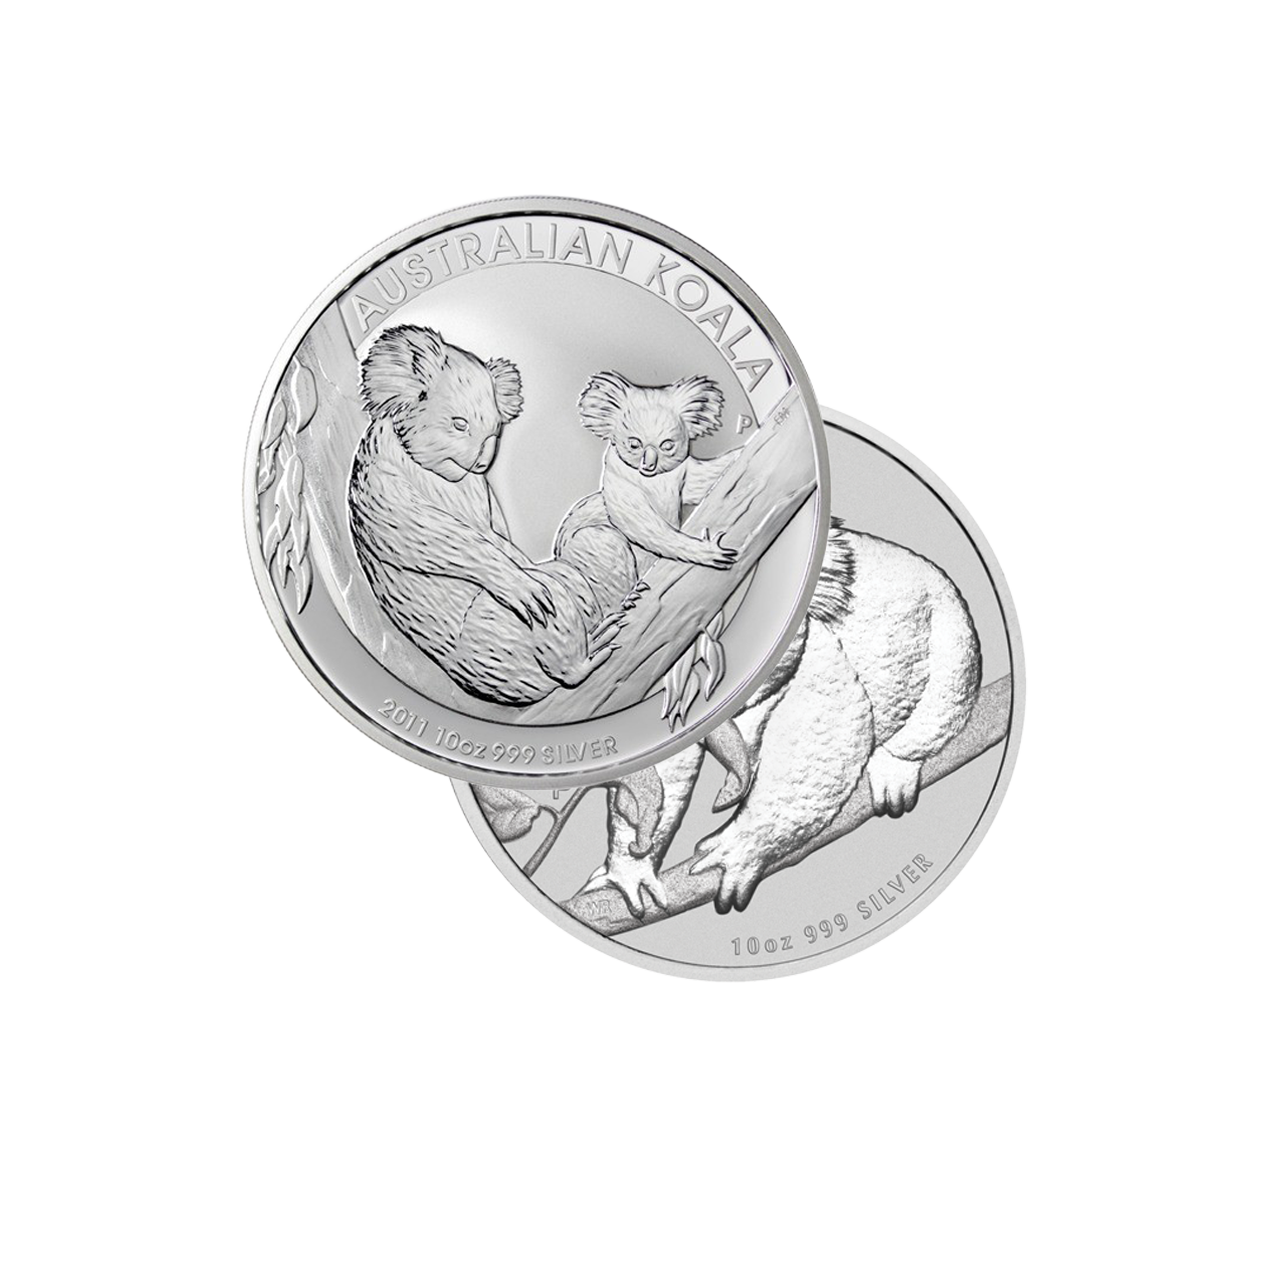 Koala (diverse Jahrgänge) - Australien 10 oz Silbermünze